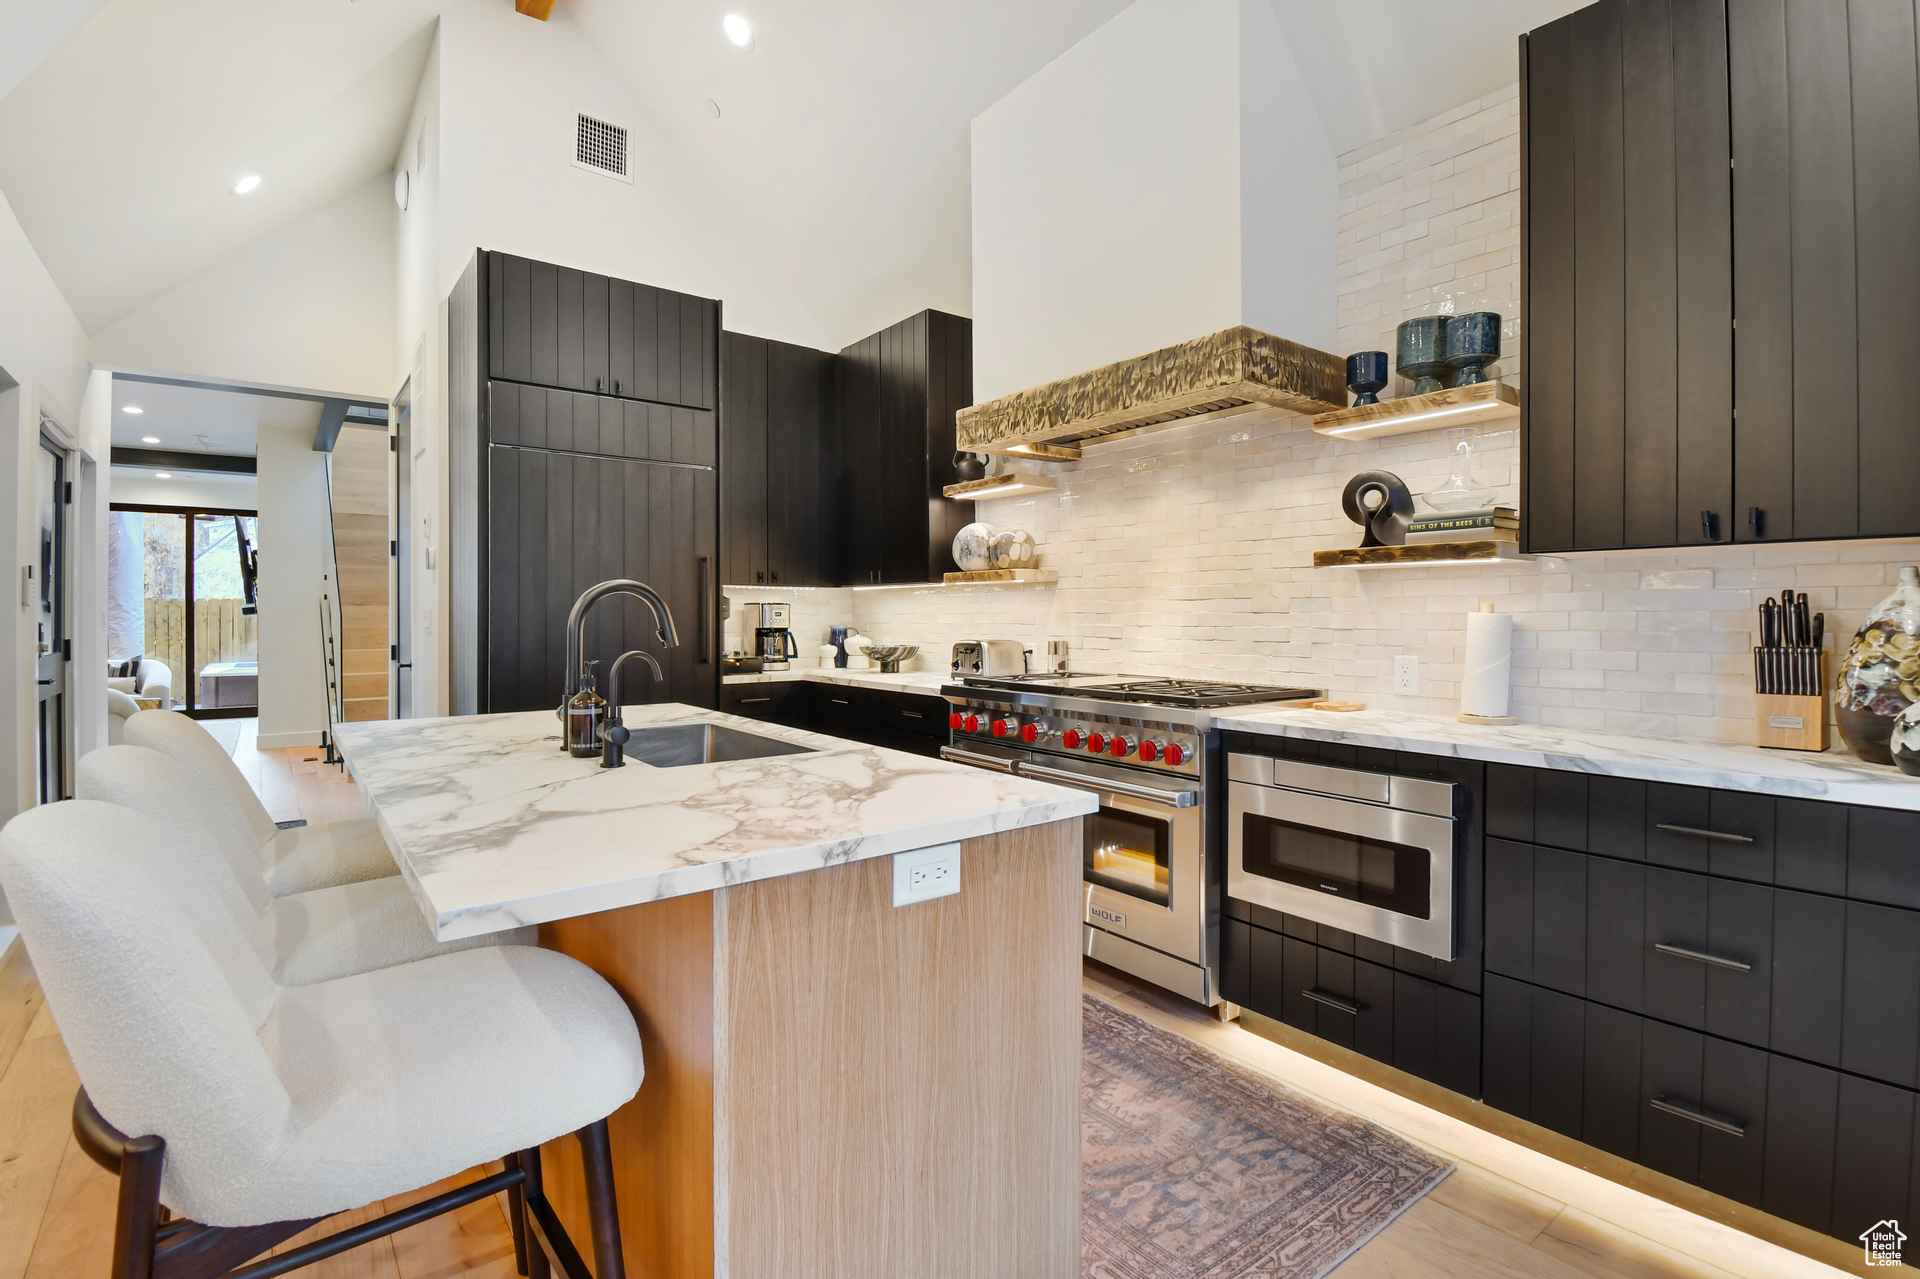 Kitchen with premium range hood, backsplash, double oven range, a center island with sink, and light hardwood / wood-style floors